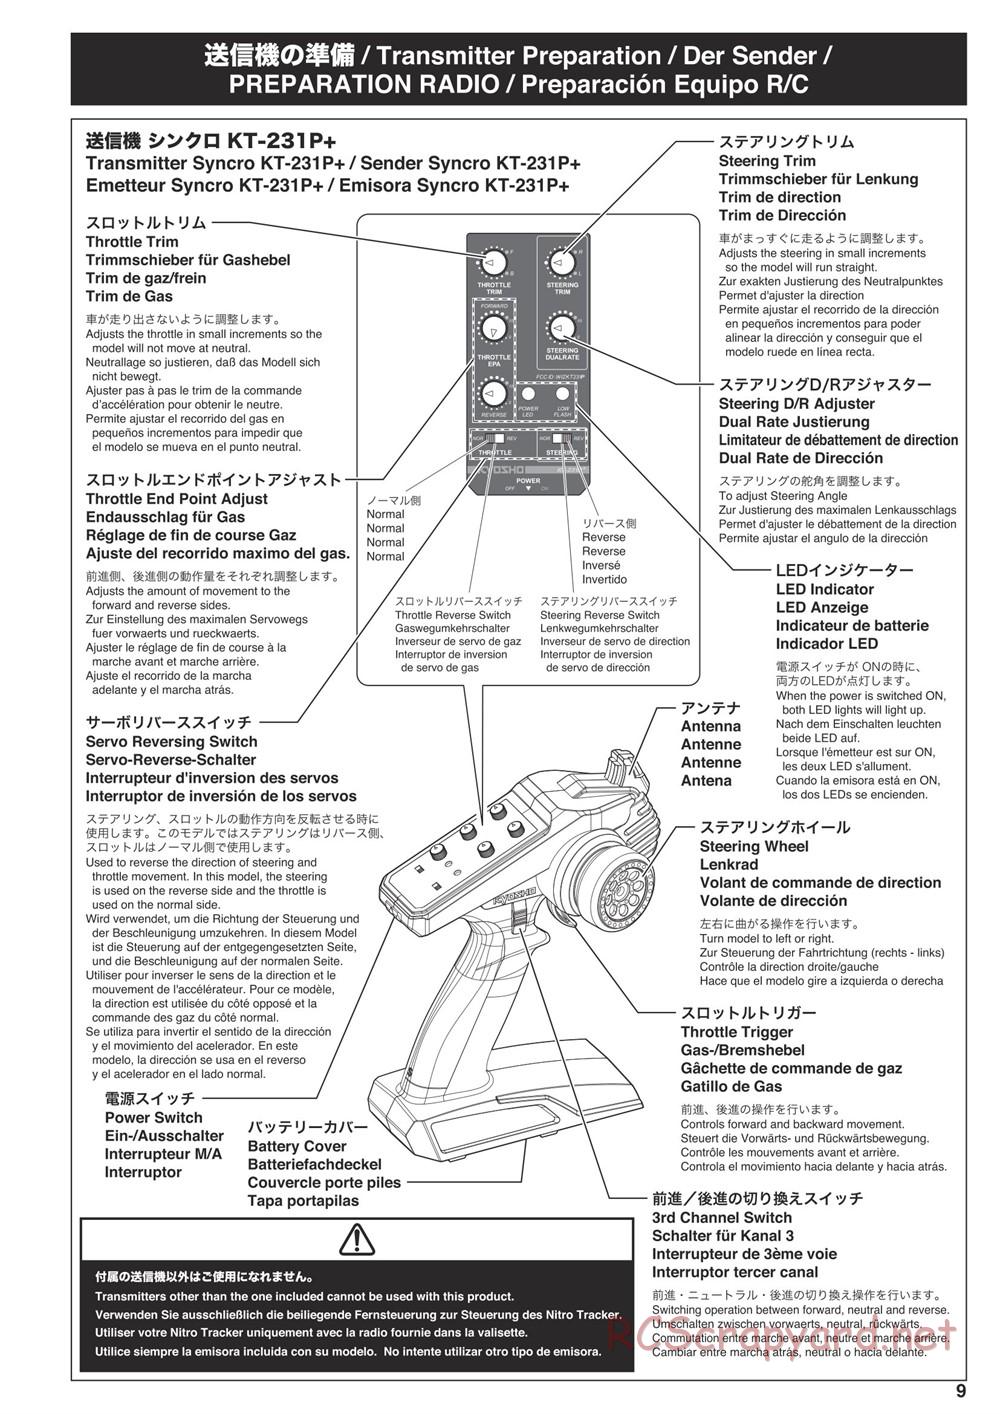 Kyosho - Nitro Tracker (2019) - Manual - Page 9